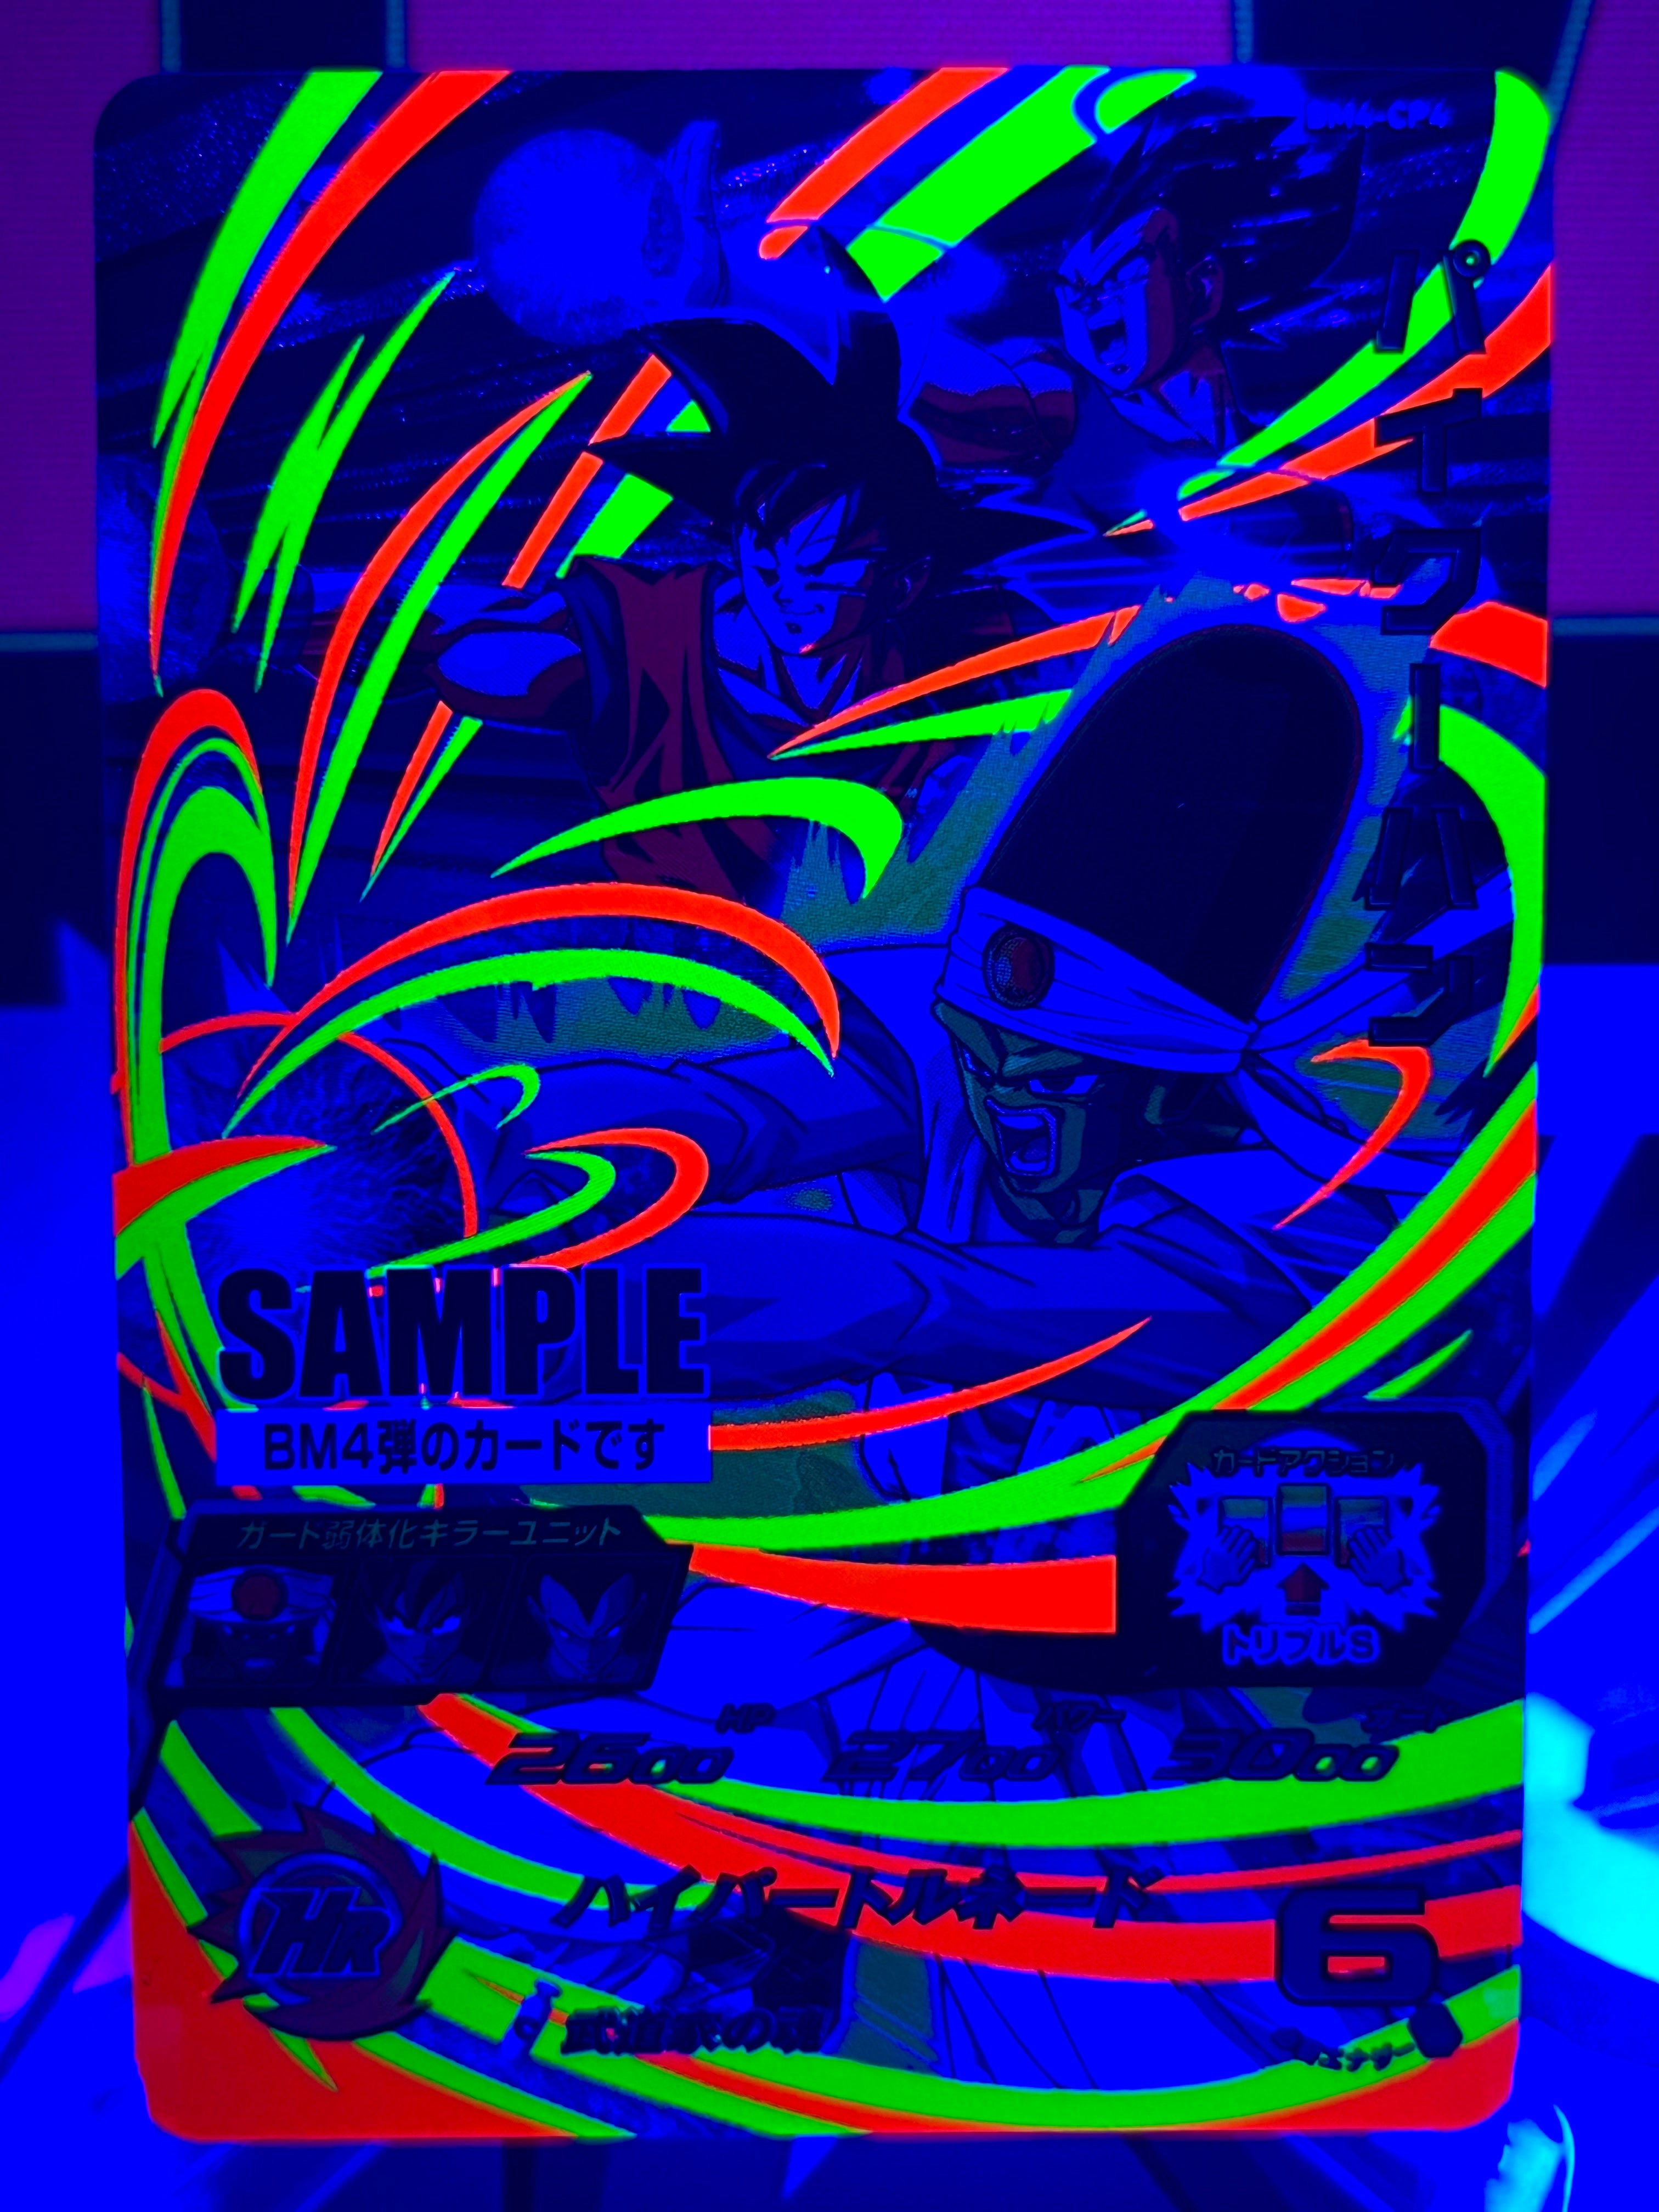 BM4-CP4 Paikuhan, Goku, & Vegeta CP SAMPLE Black Light (2020)